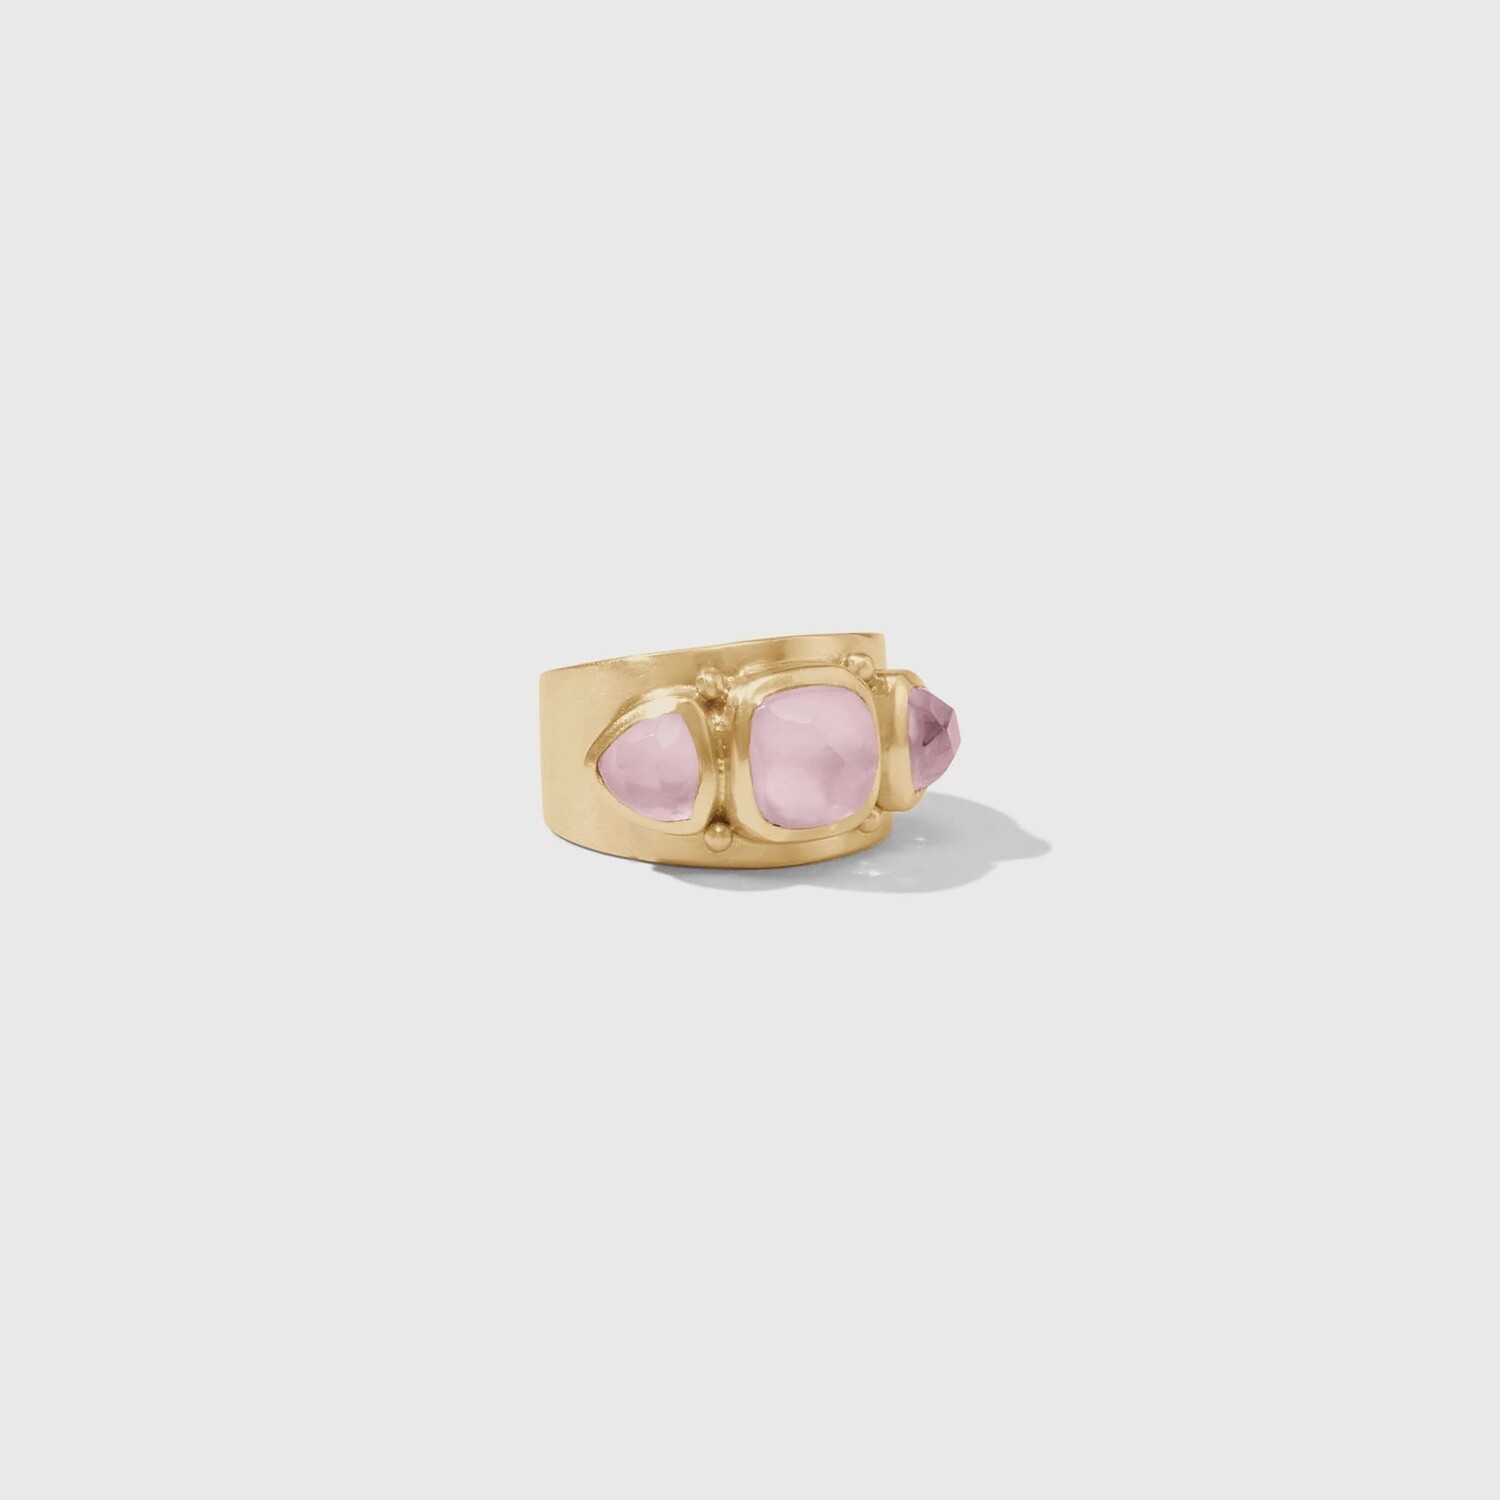 Julie Vos Aquitaine Ring, Size: 7, color: Iridescent Rose